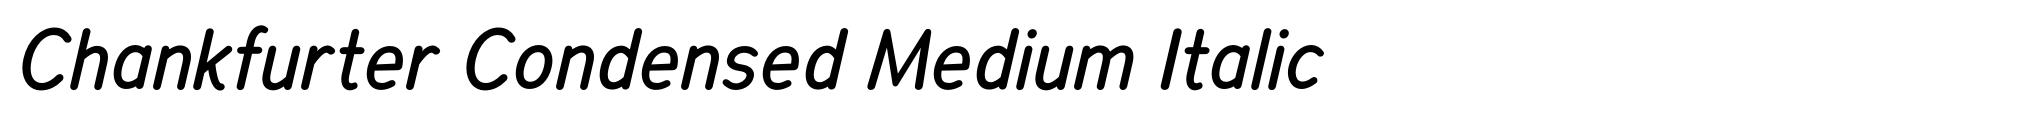 Chankfurter Condensed Medium Italic image